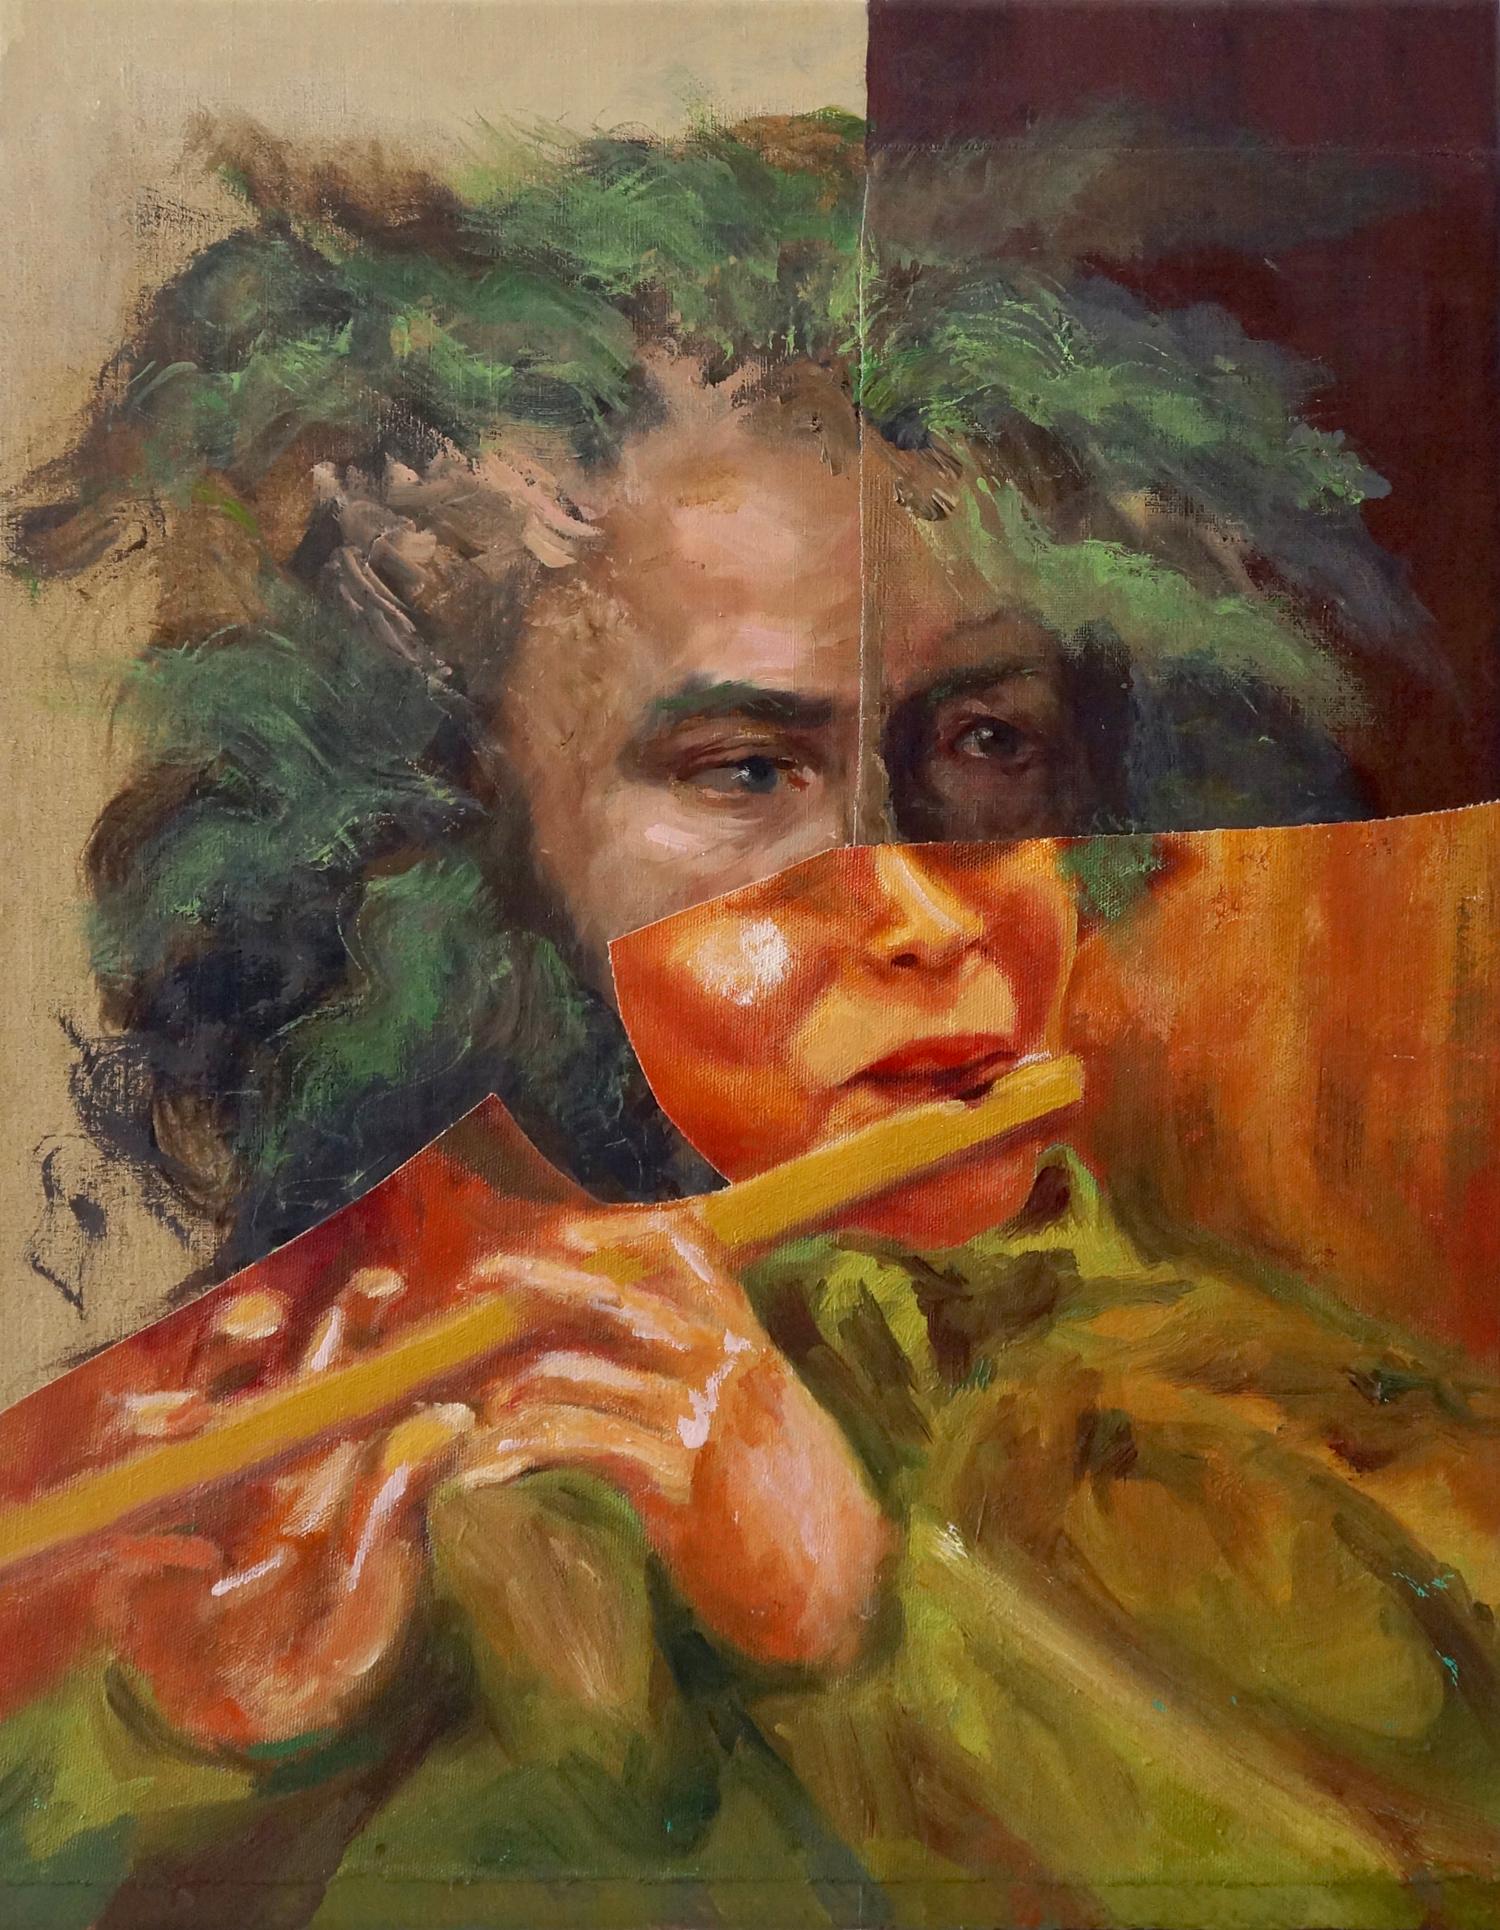 John Baker Portrait Painting - "Flute Player", contemporary, portrait, orange, green, collage, acrylic painting